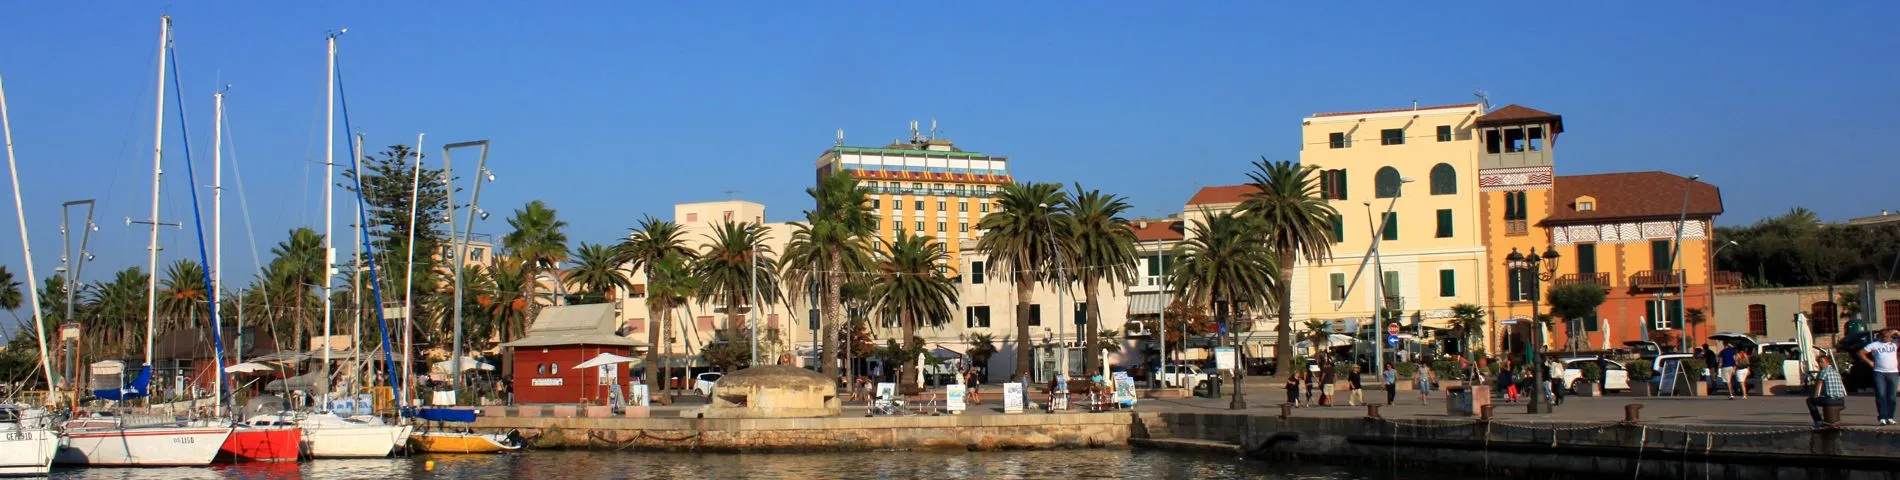 Alguer (Sardenya) - 